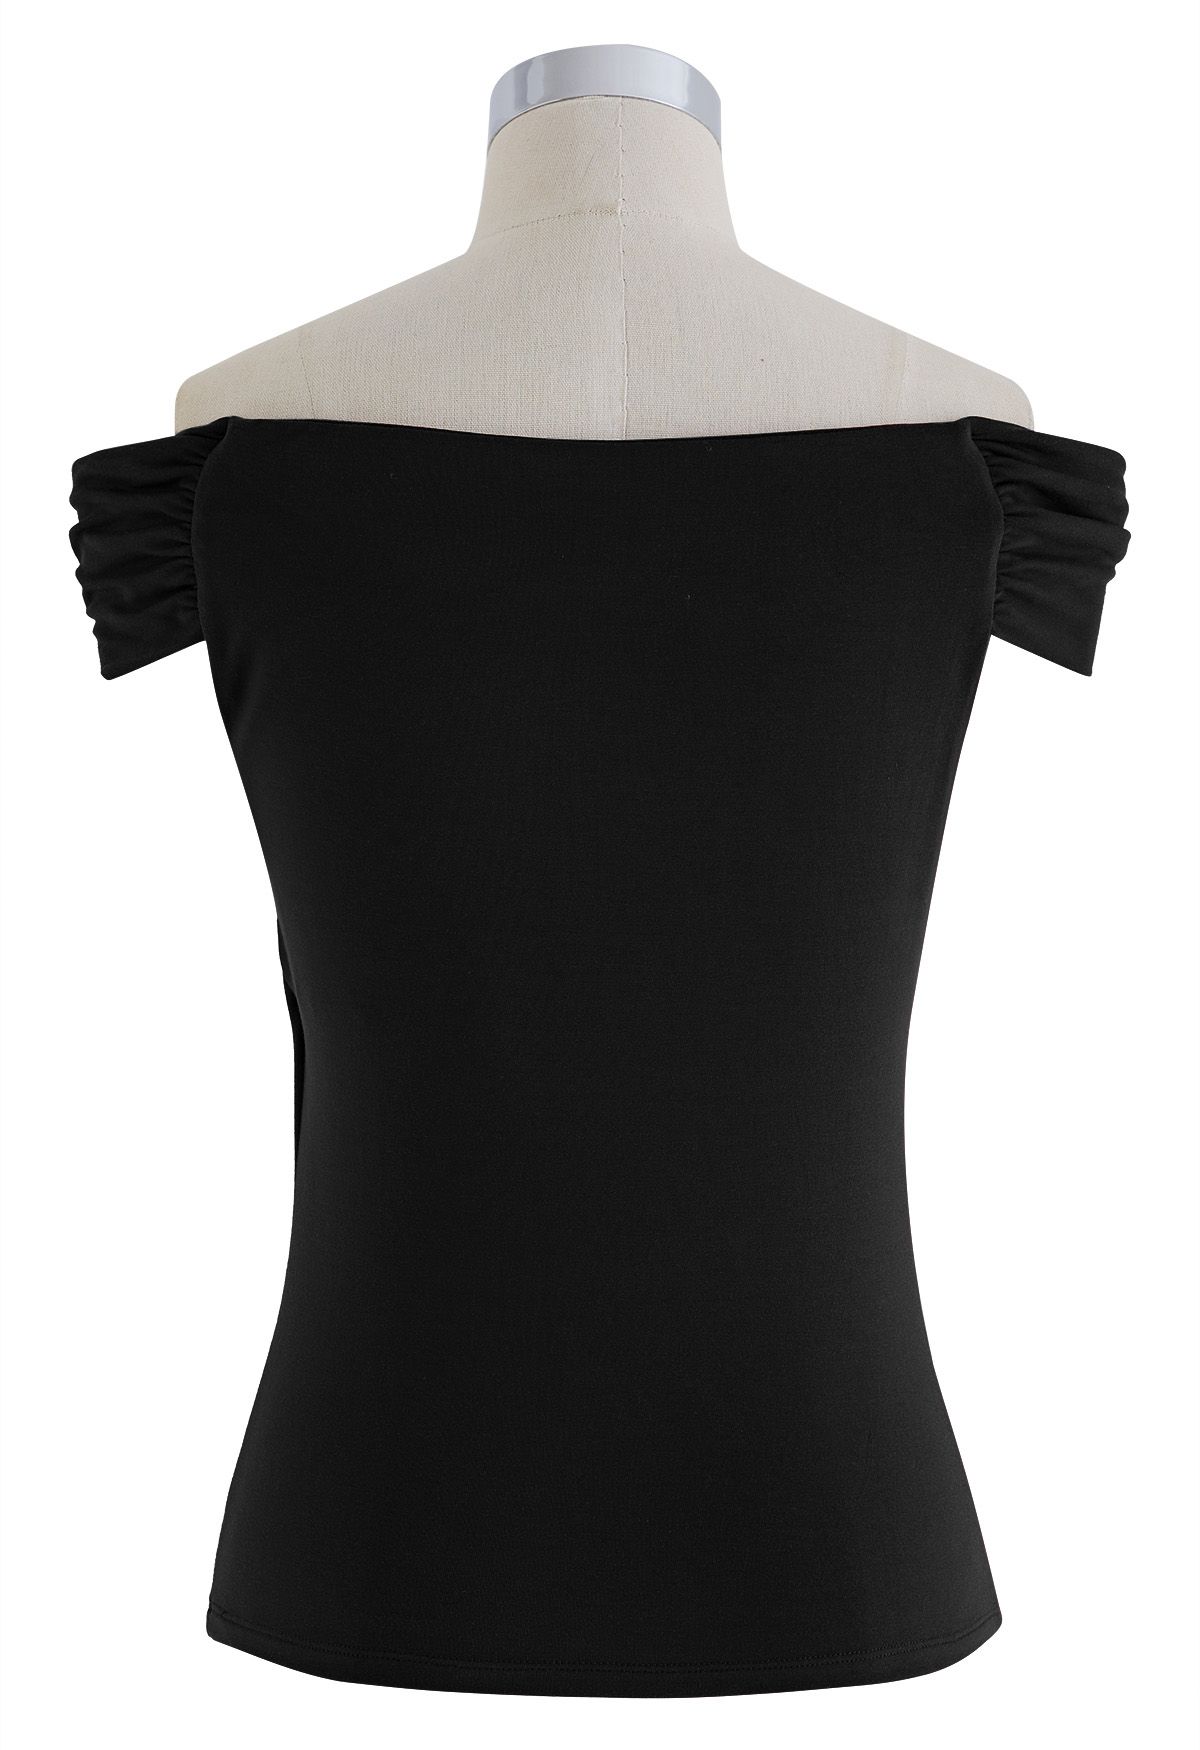 Simple Slanted Off-Shoulder Crop Top in Black